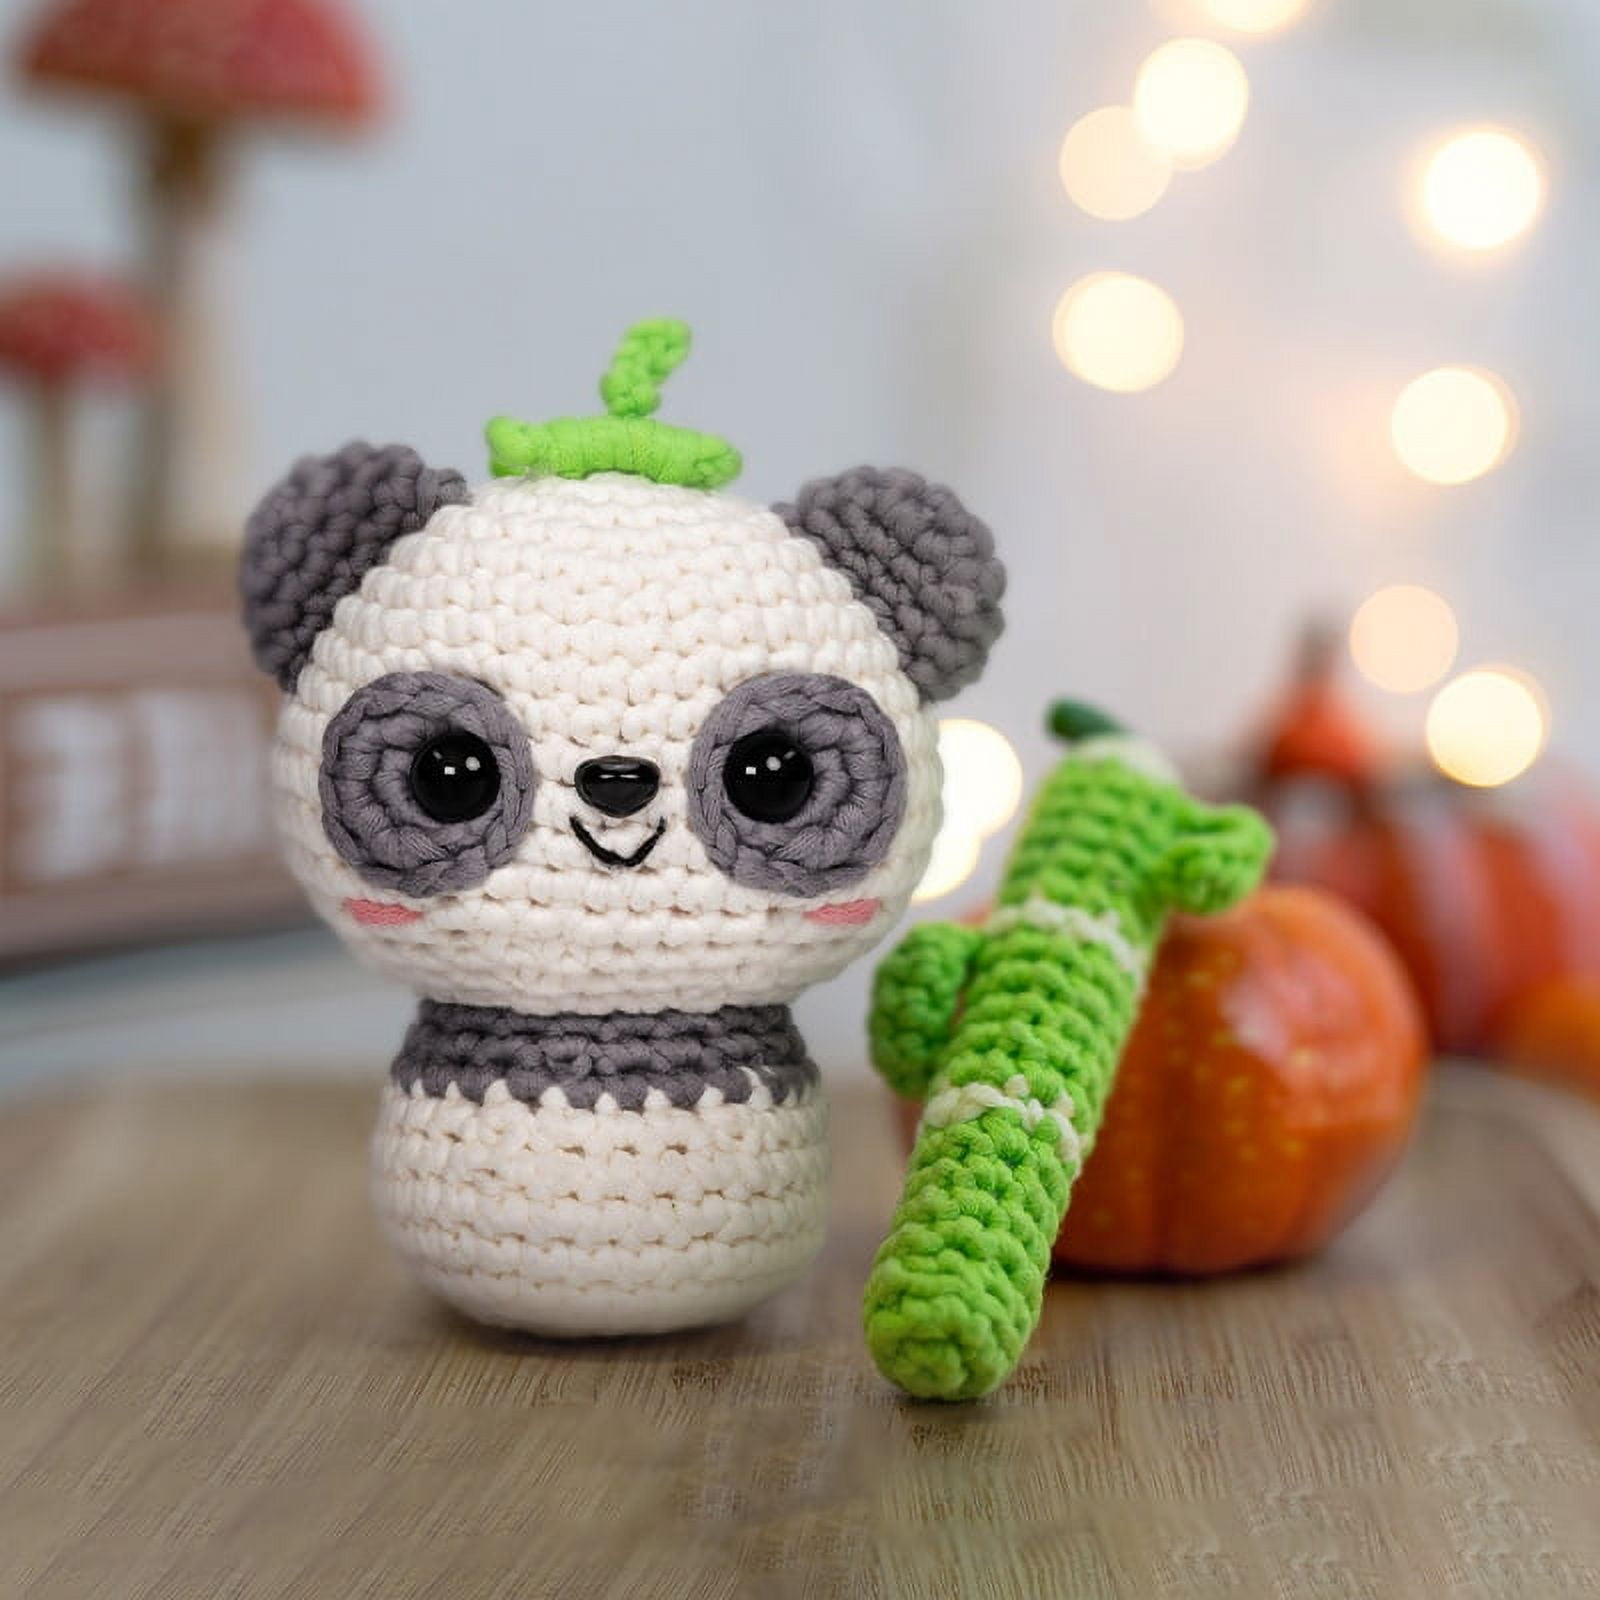 Mewaii Crochet Kit for Beginners with Tape Yarn, Complete DIY knitting  kits, Animal Crochet Set( Axolotl) 